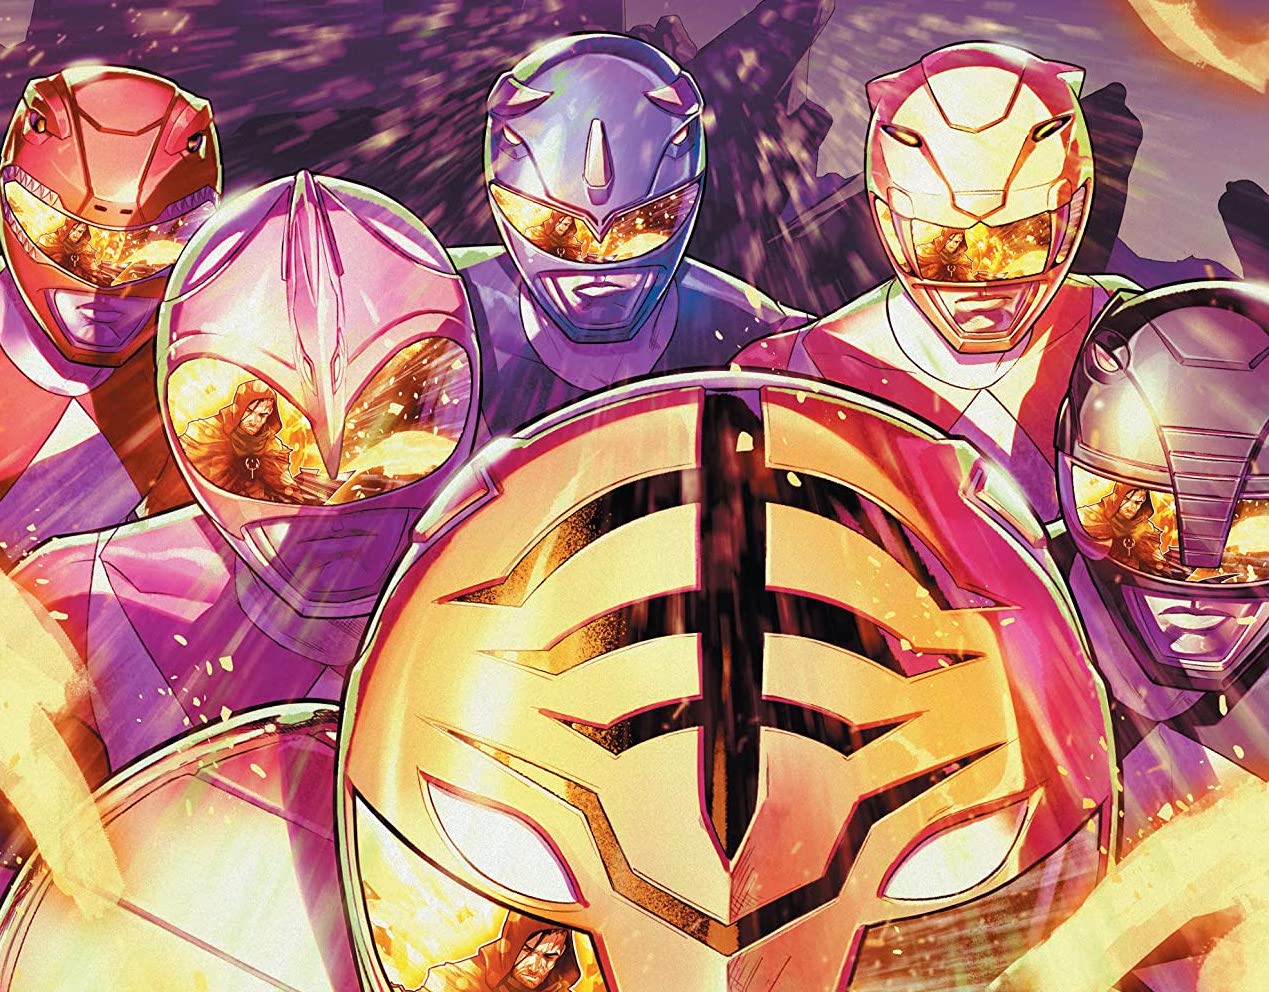 Mighty Morphin' Power Rangers #51